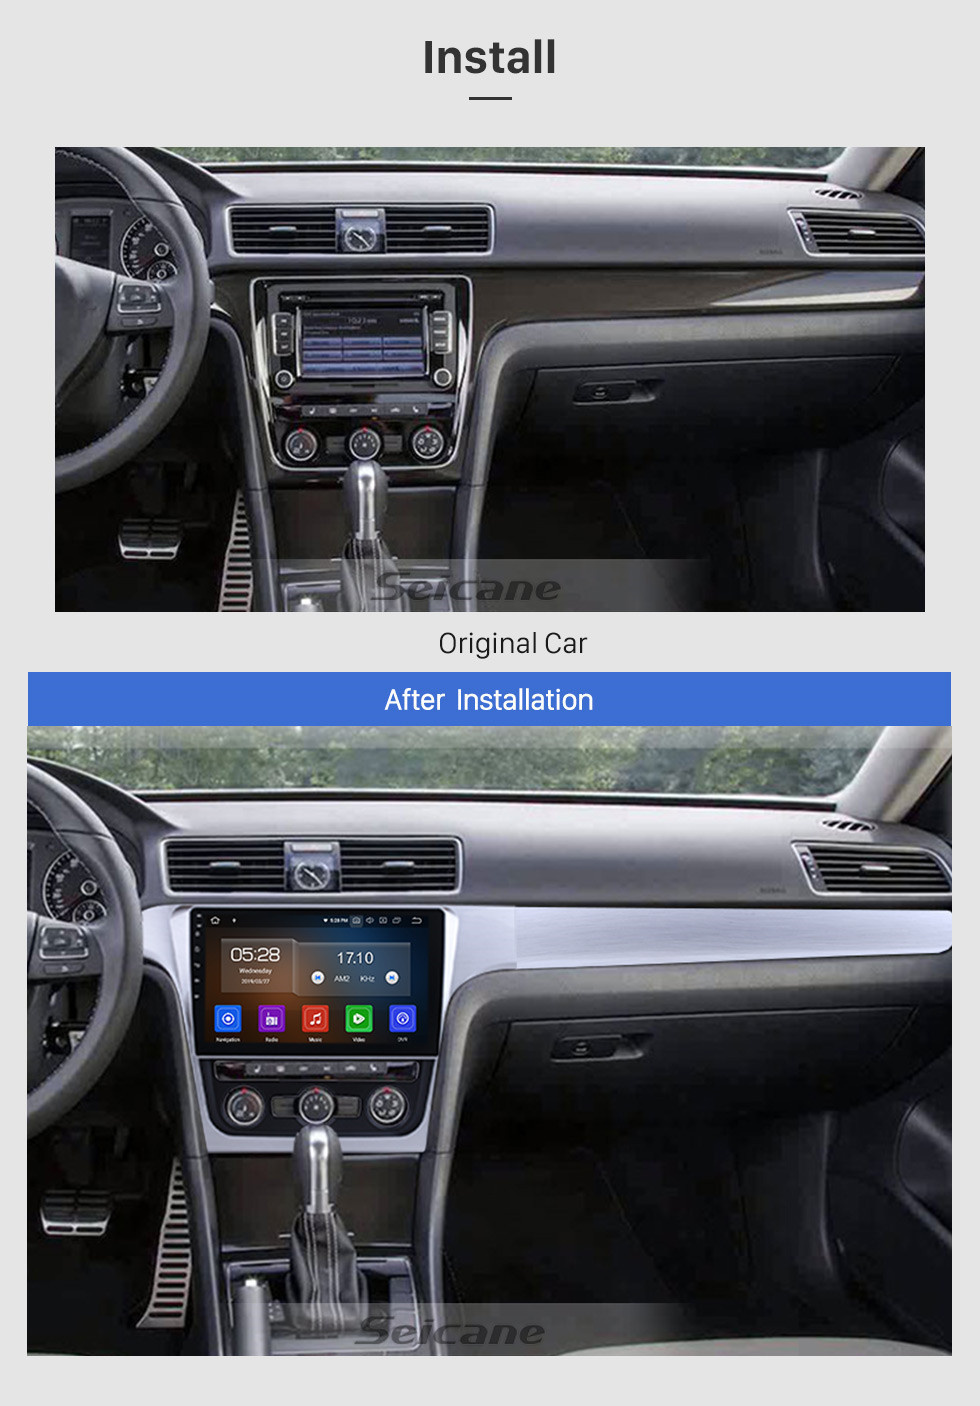 Seicane 2014 2015 VW Volkswagen Passat Android 13.0 Kapazitiver Touchscreen Radio GPS Navigationssystem mit Bluetooth TPMS DVR OBD II Rückfahrkamera AUX USB SD 3G WiFi Lenkradsteuerung Video